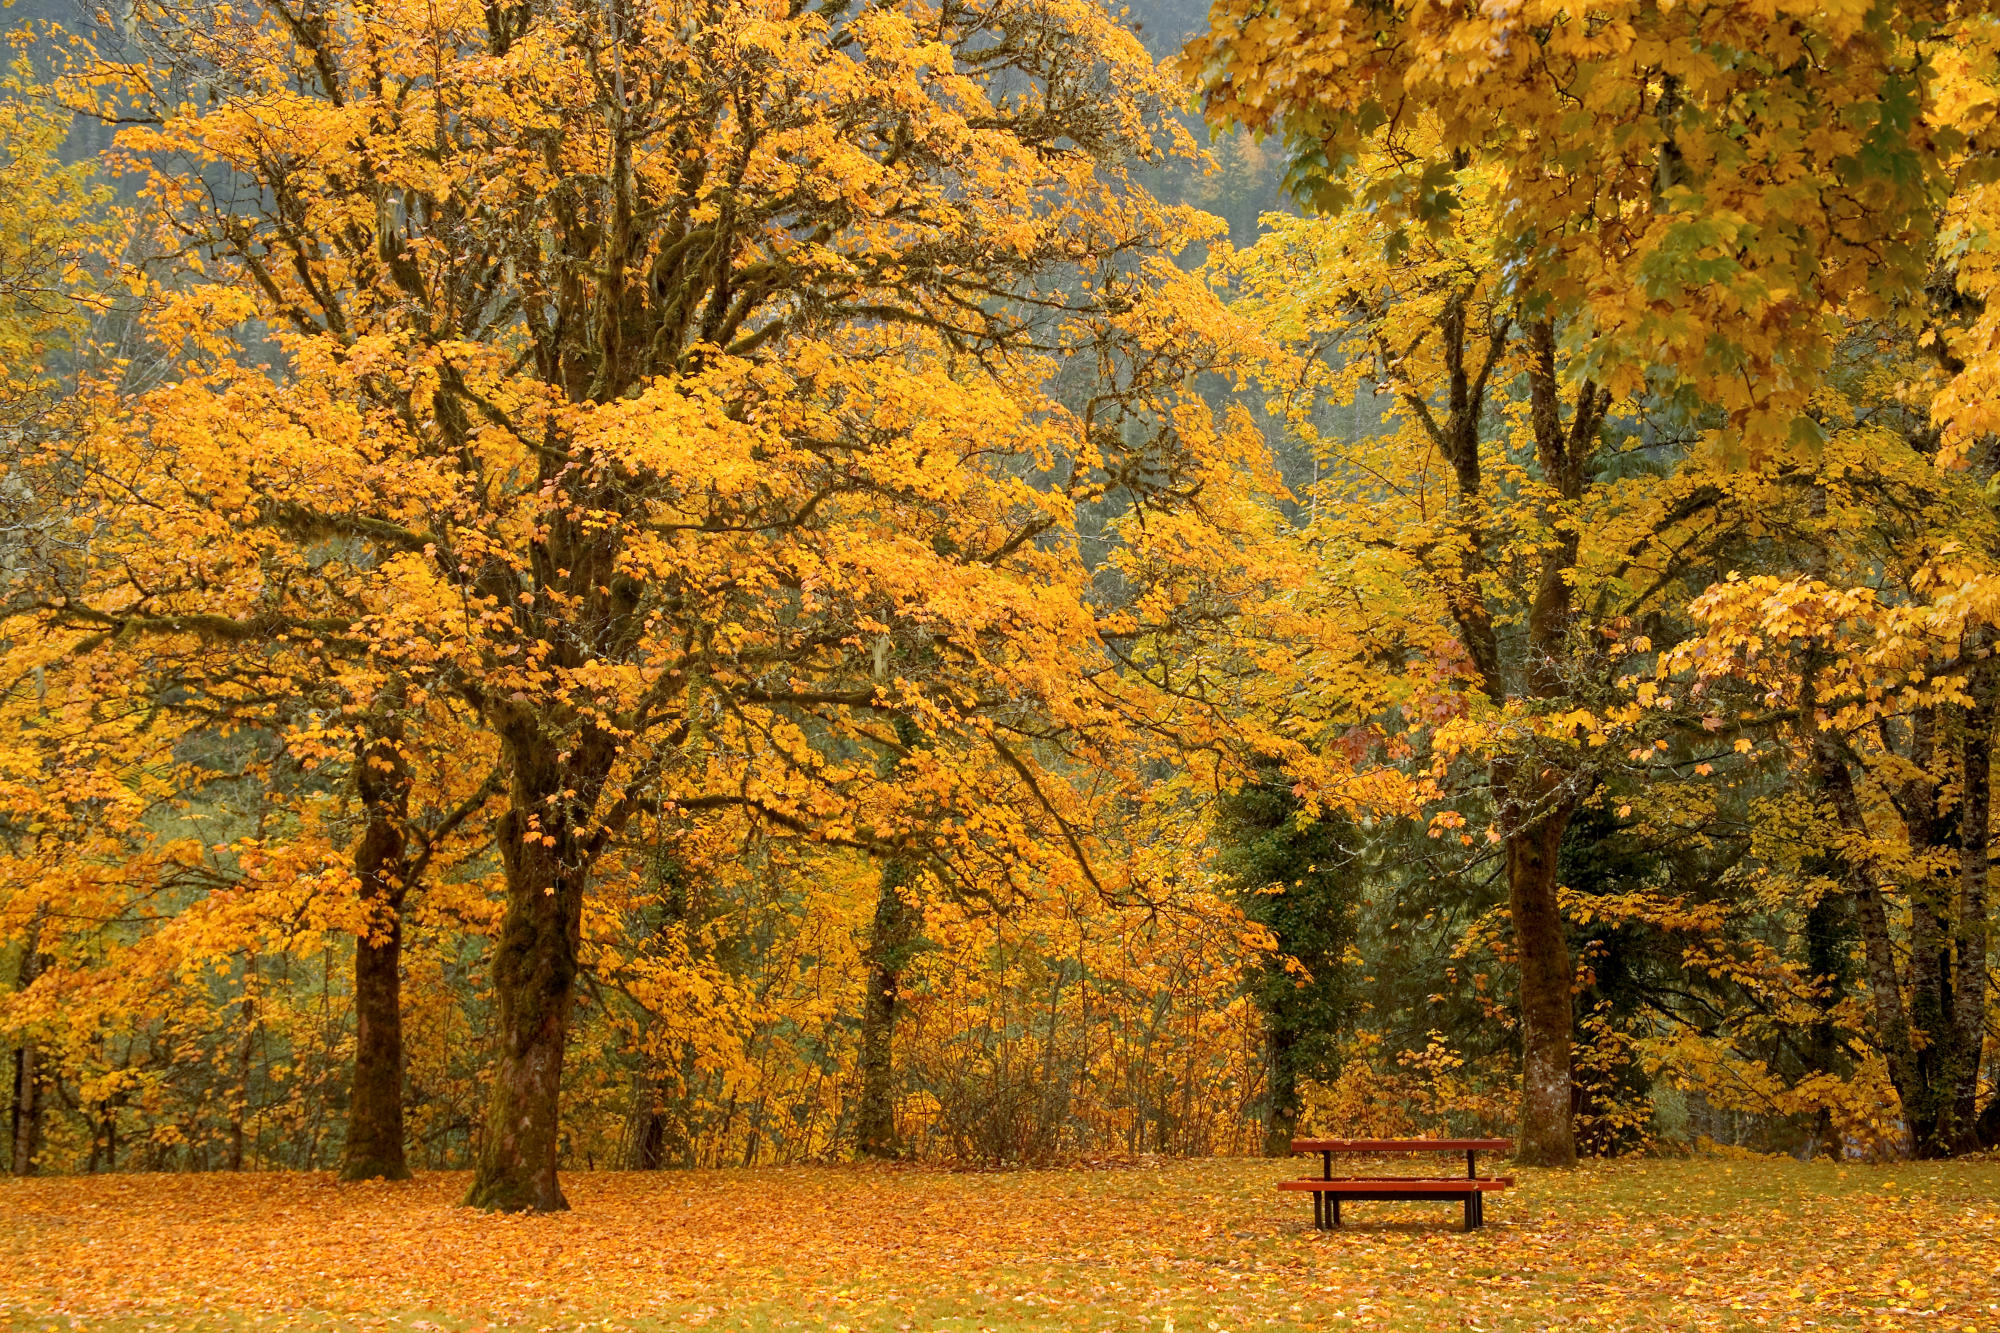 Golden Autumn Park by Don Paulson